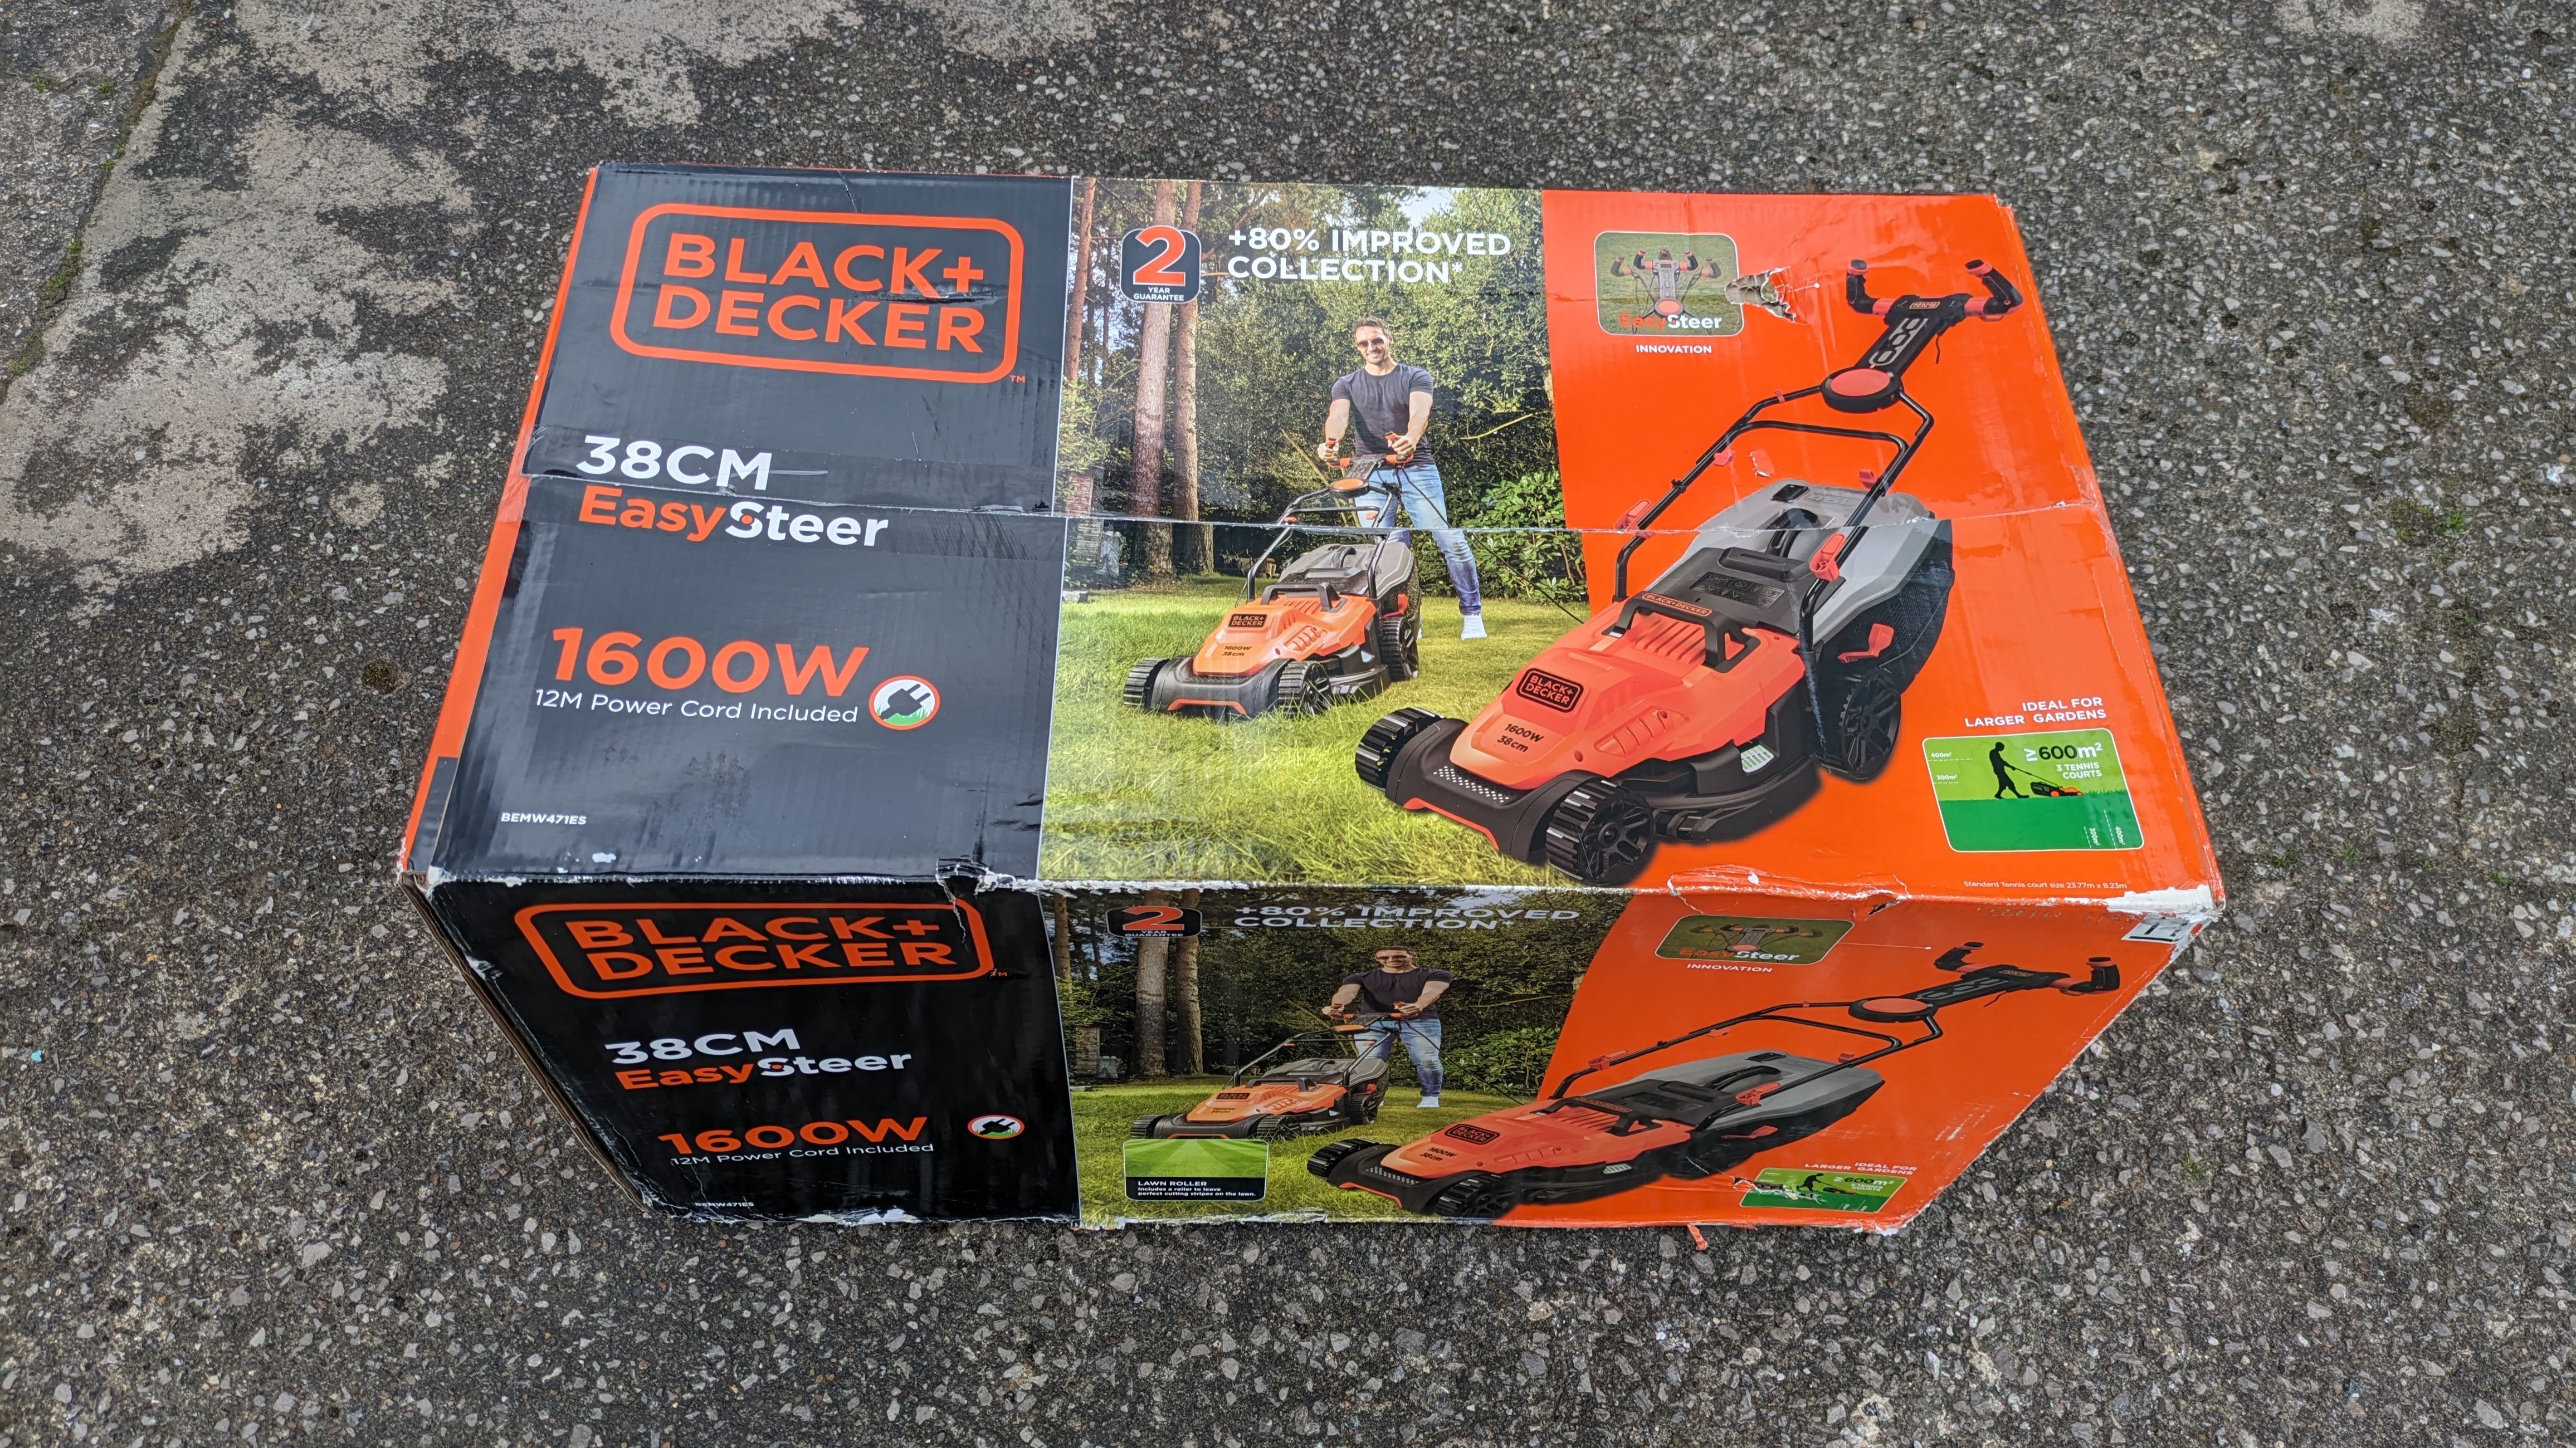 The Black + Decker lawnmower in its cardboard packaging